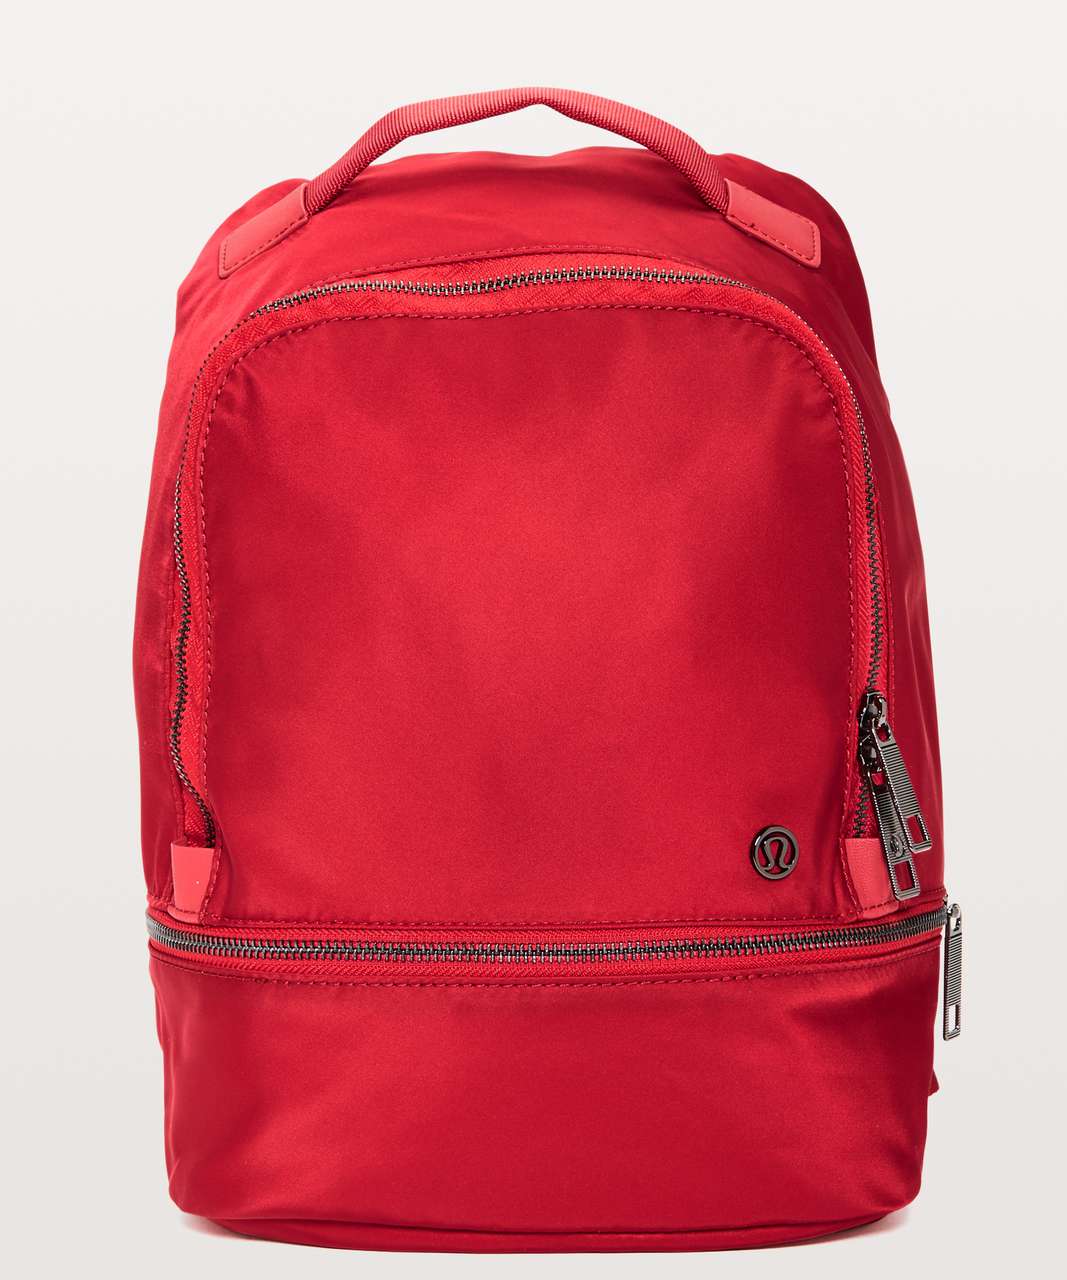 Lululemon City Adventurer Backpack